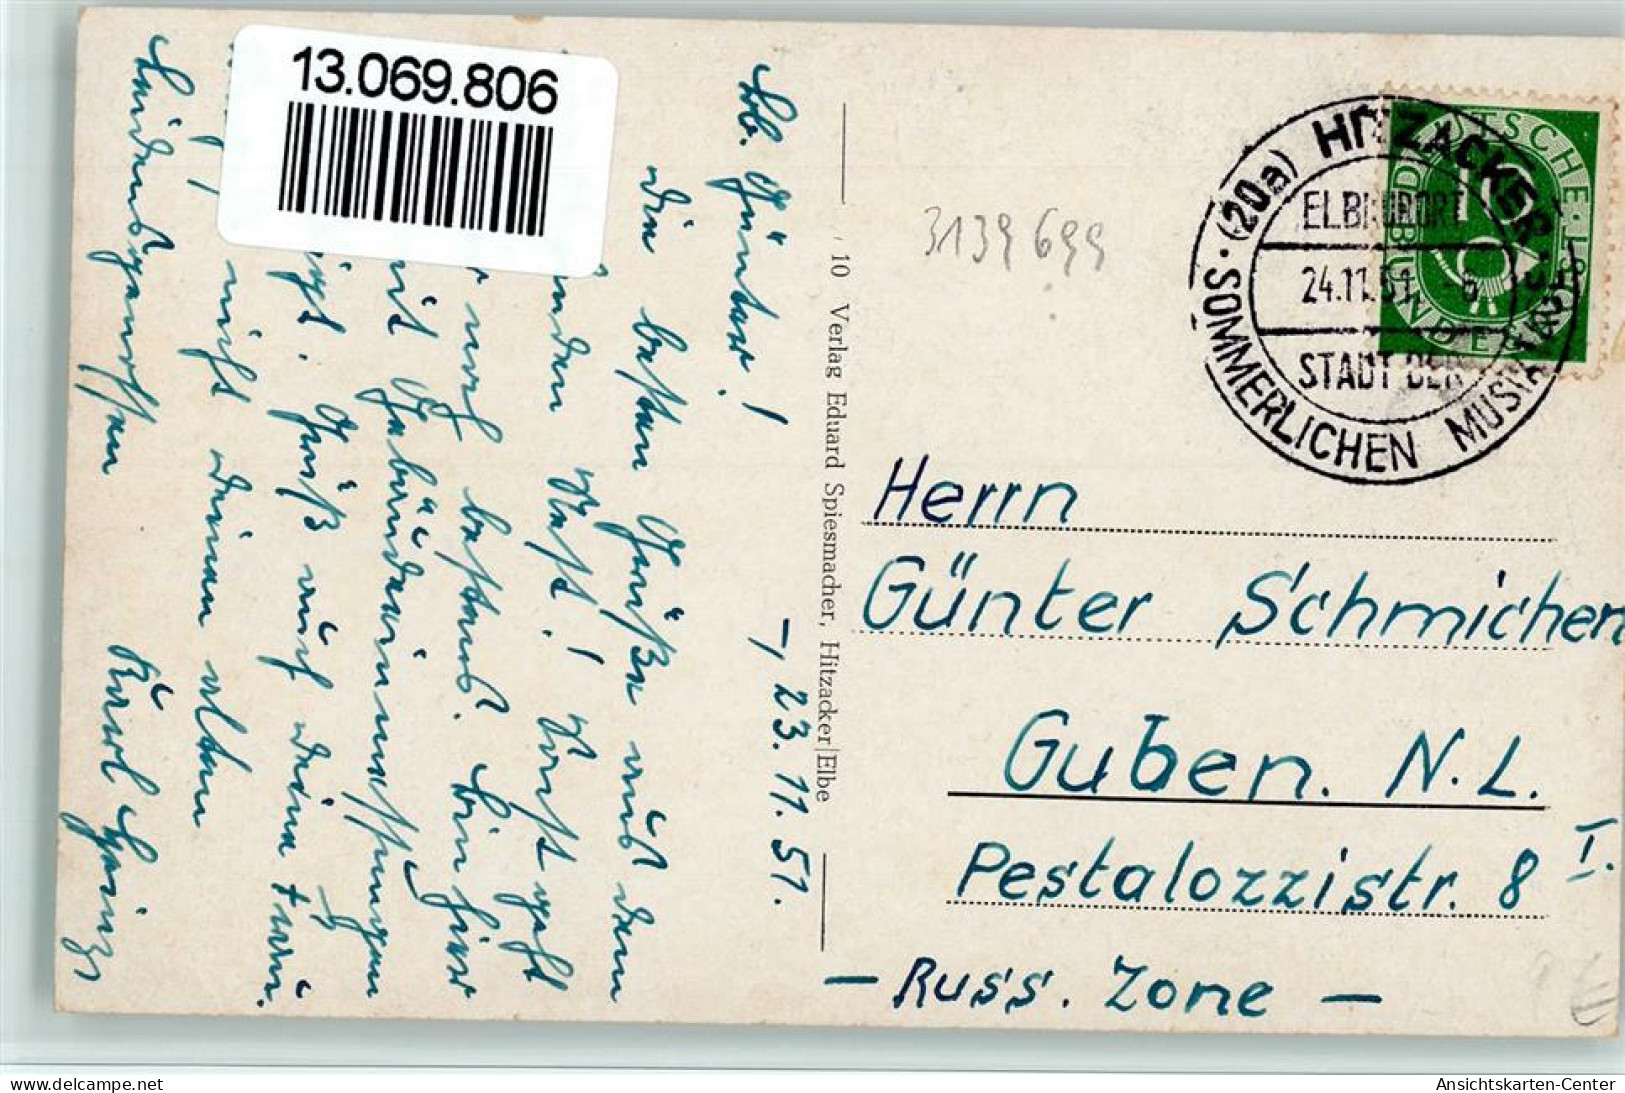 13069806 - Hitzacker (Elbe) - Hitzacker